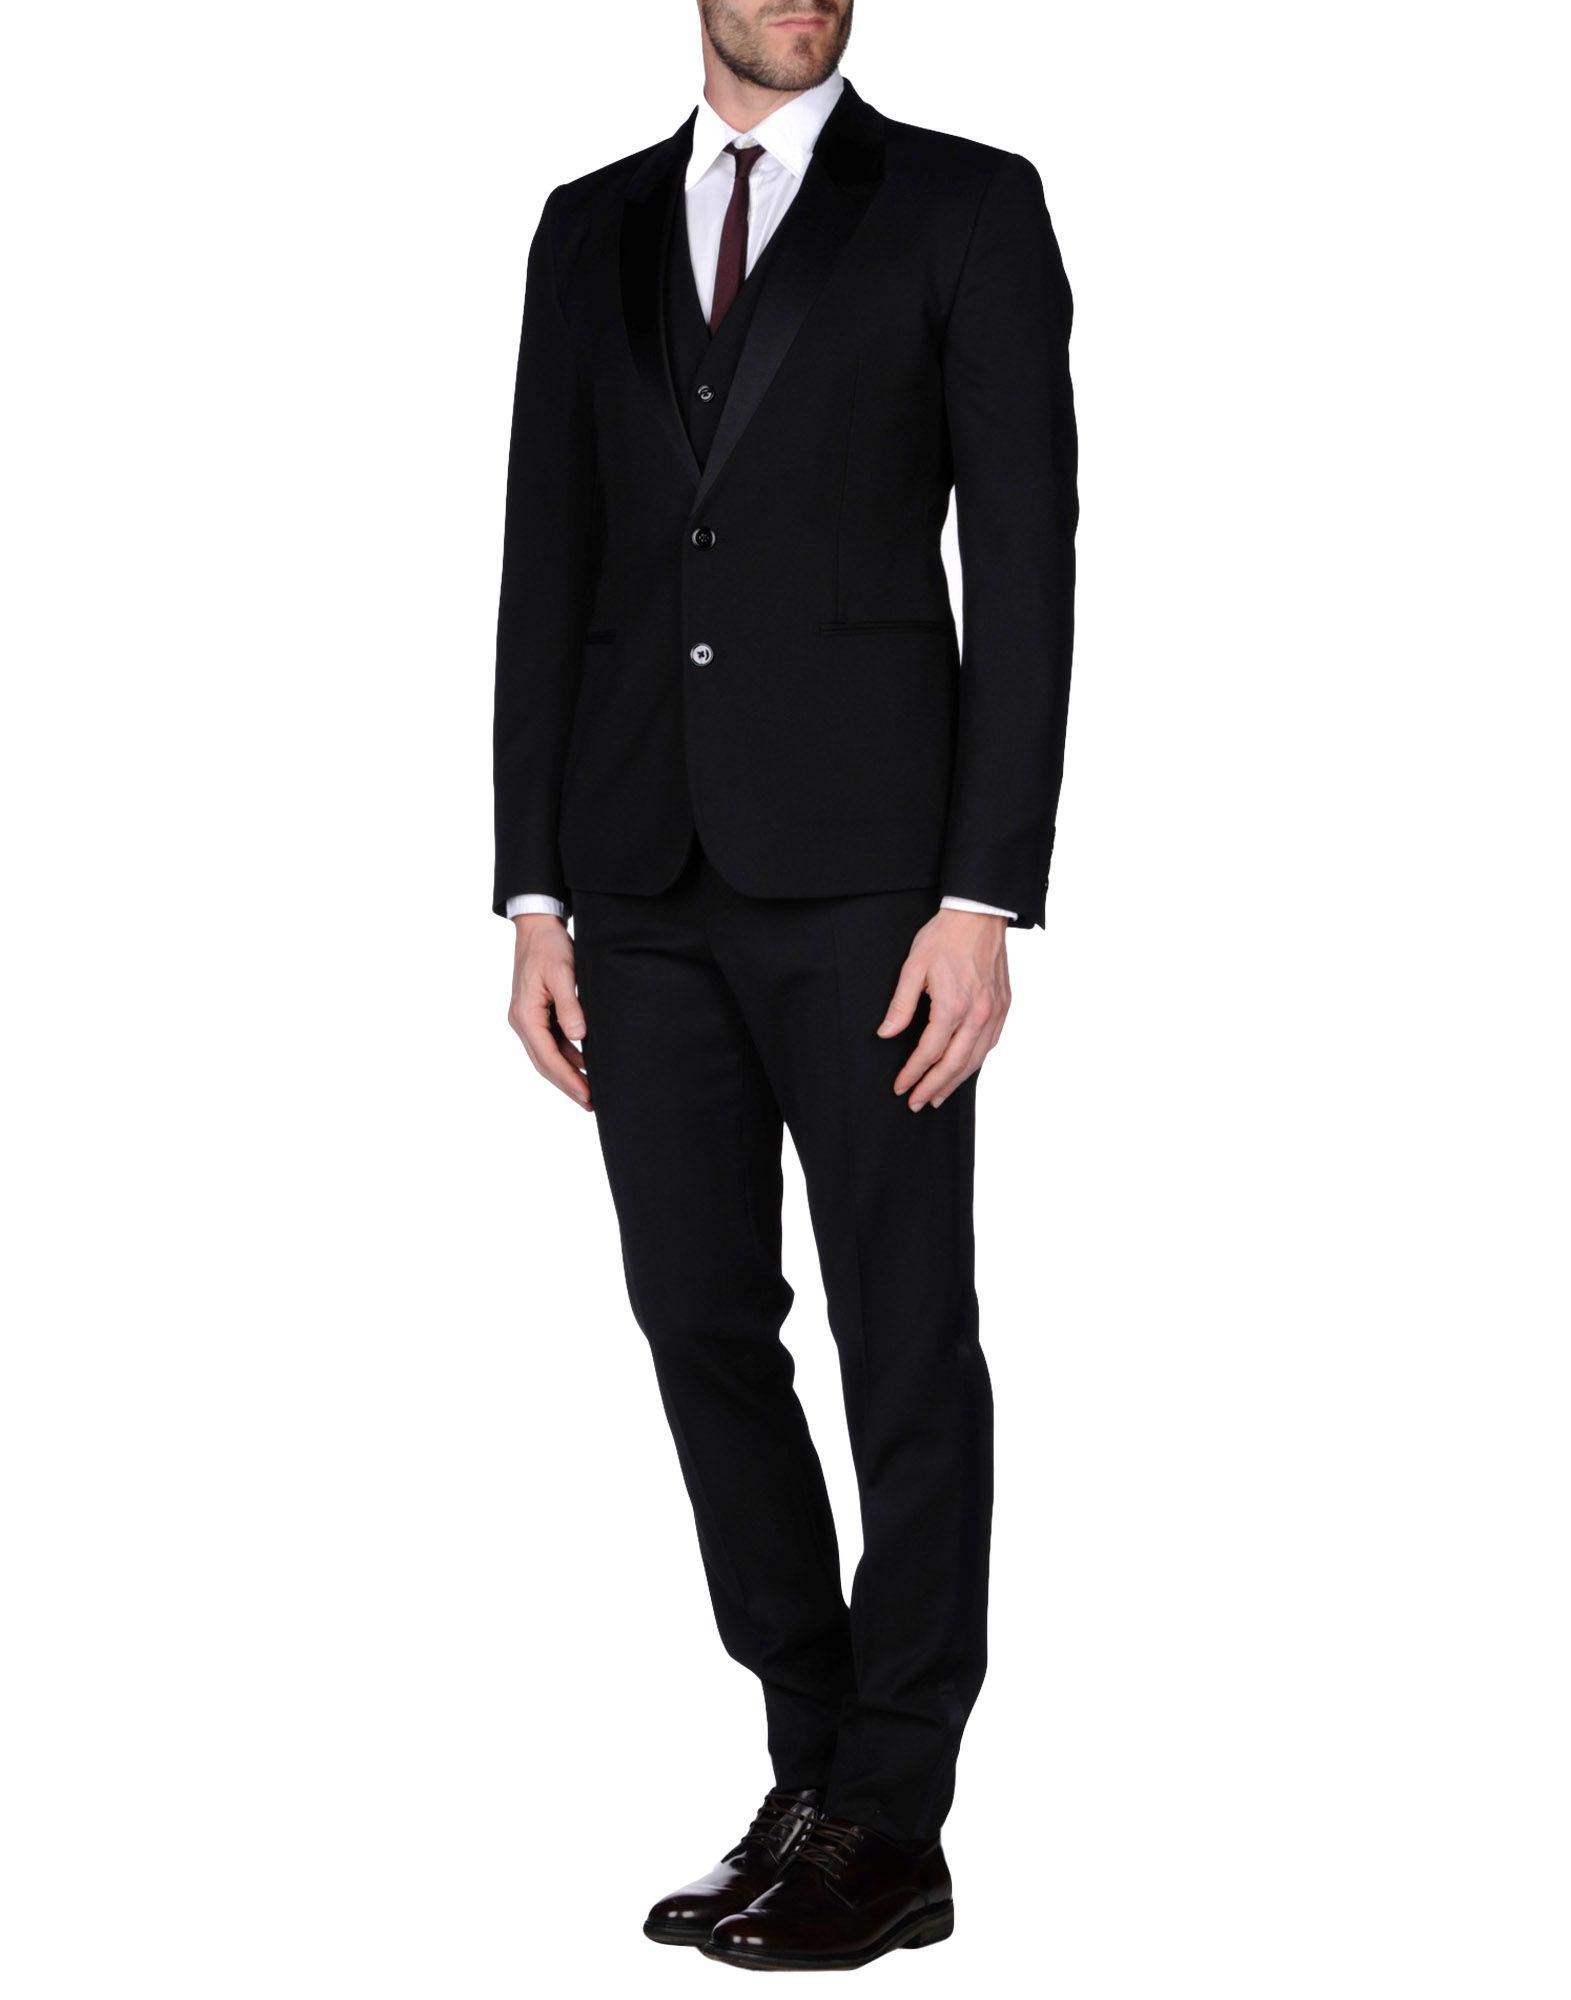 Lyst - Dolce & Gabbana Suit in Black for Men